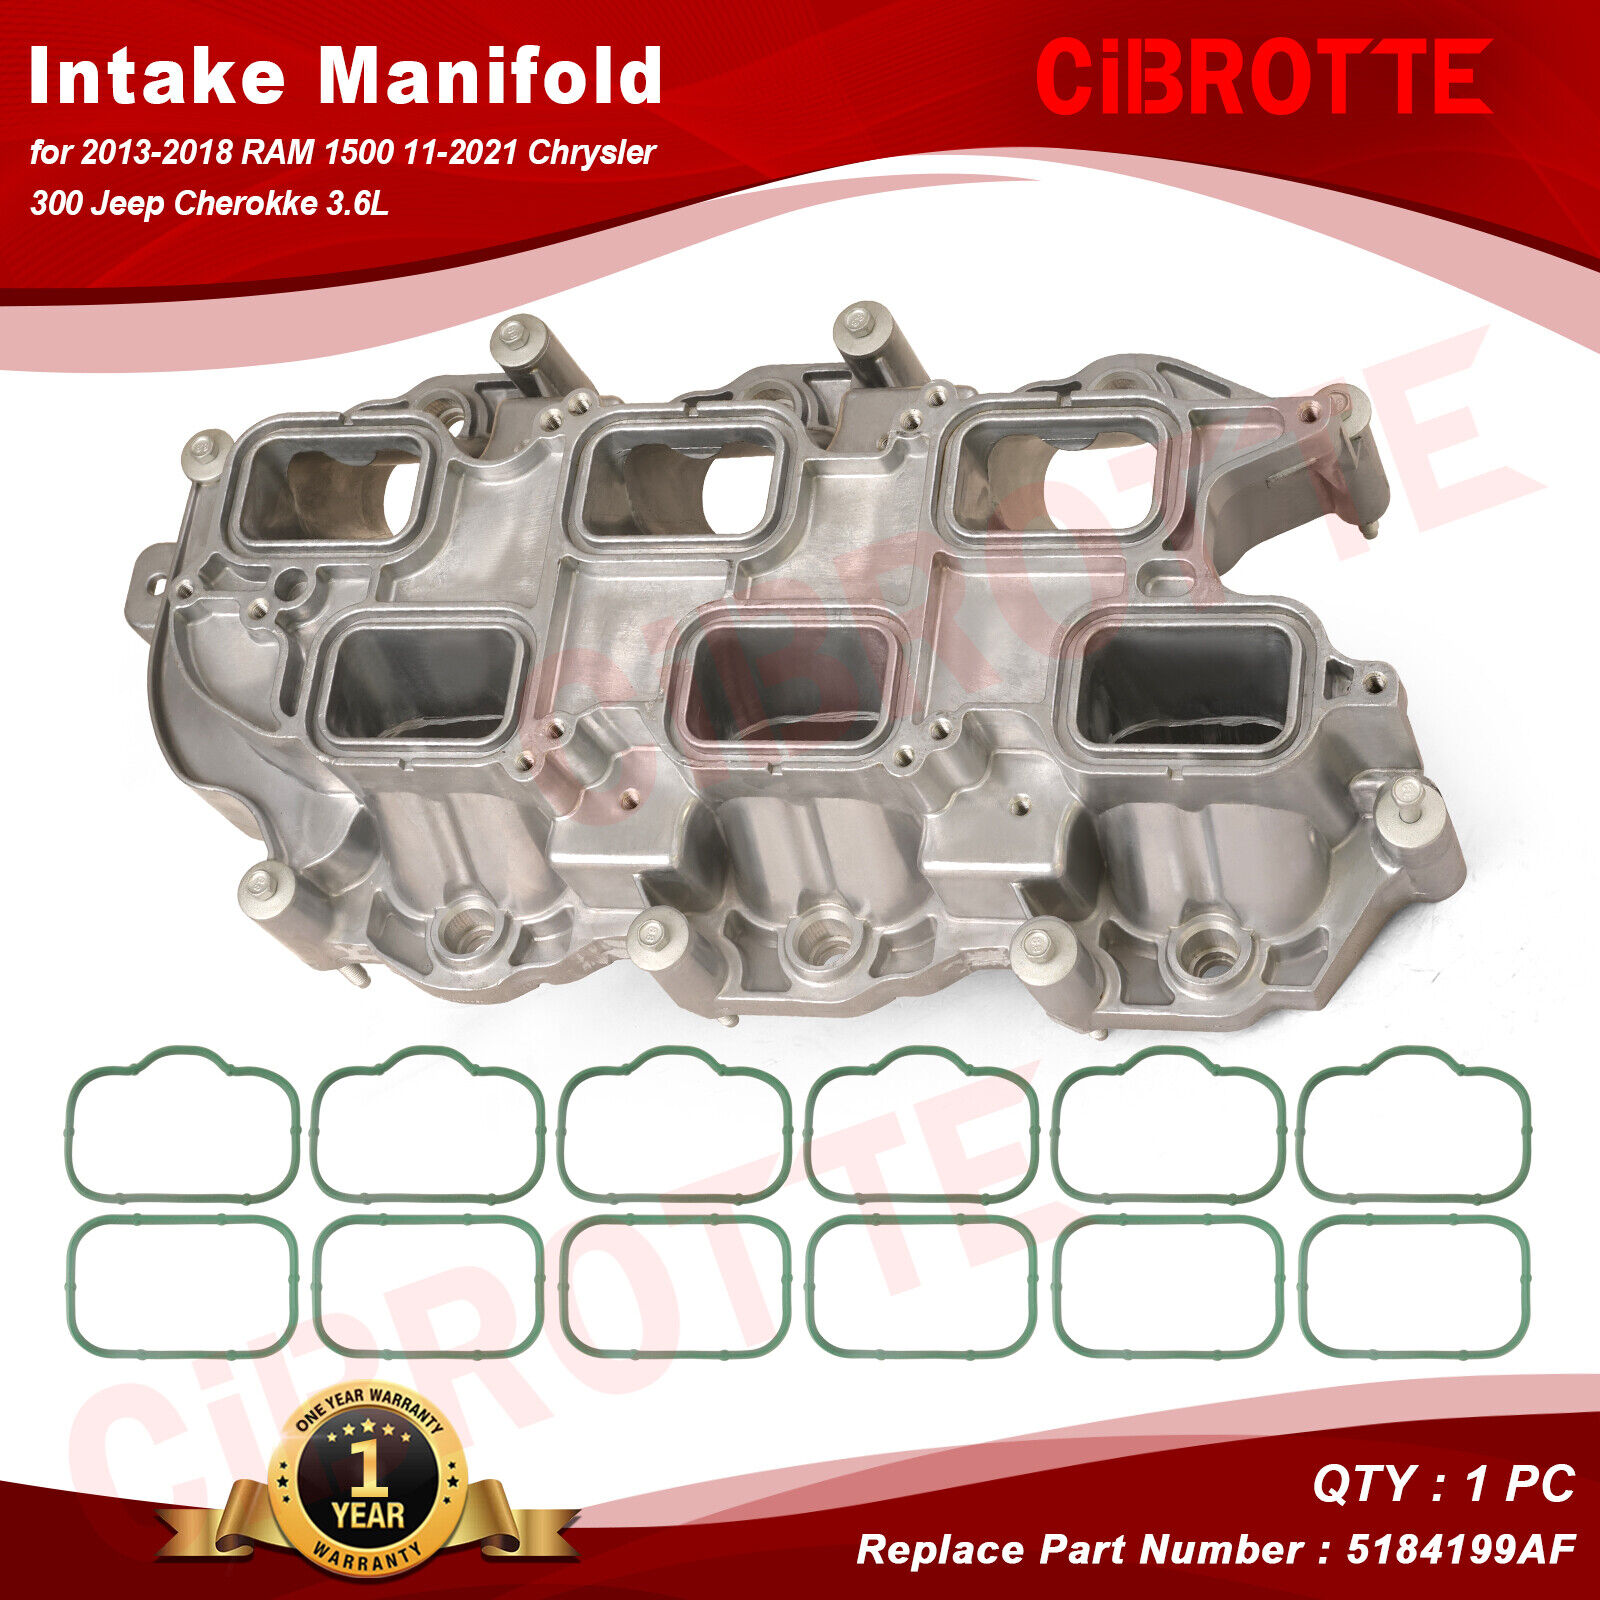 Upgrade Lower Intake Manifold for 2013-18 RAM 1500 11-21 Chrysler 300 Jeep 3.6L